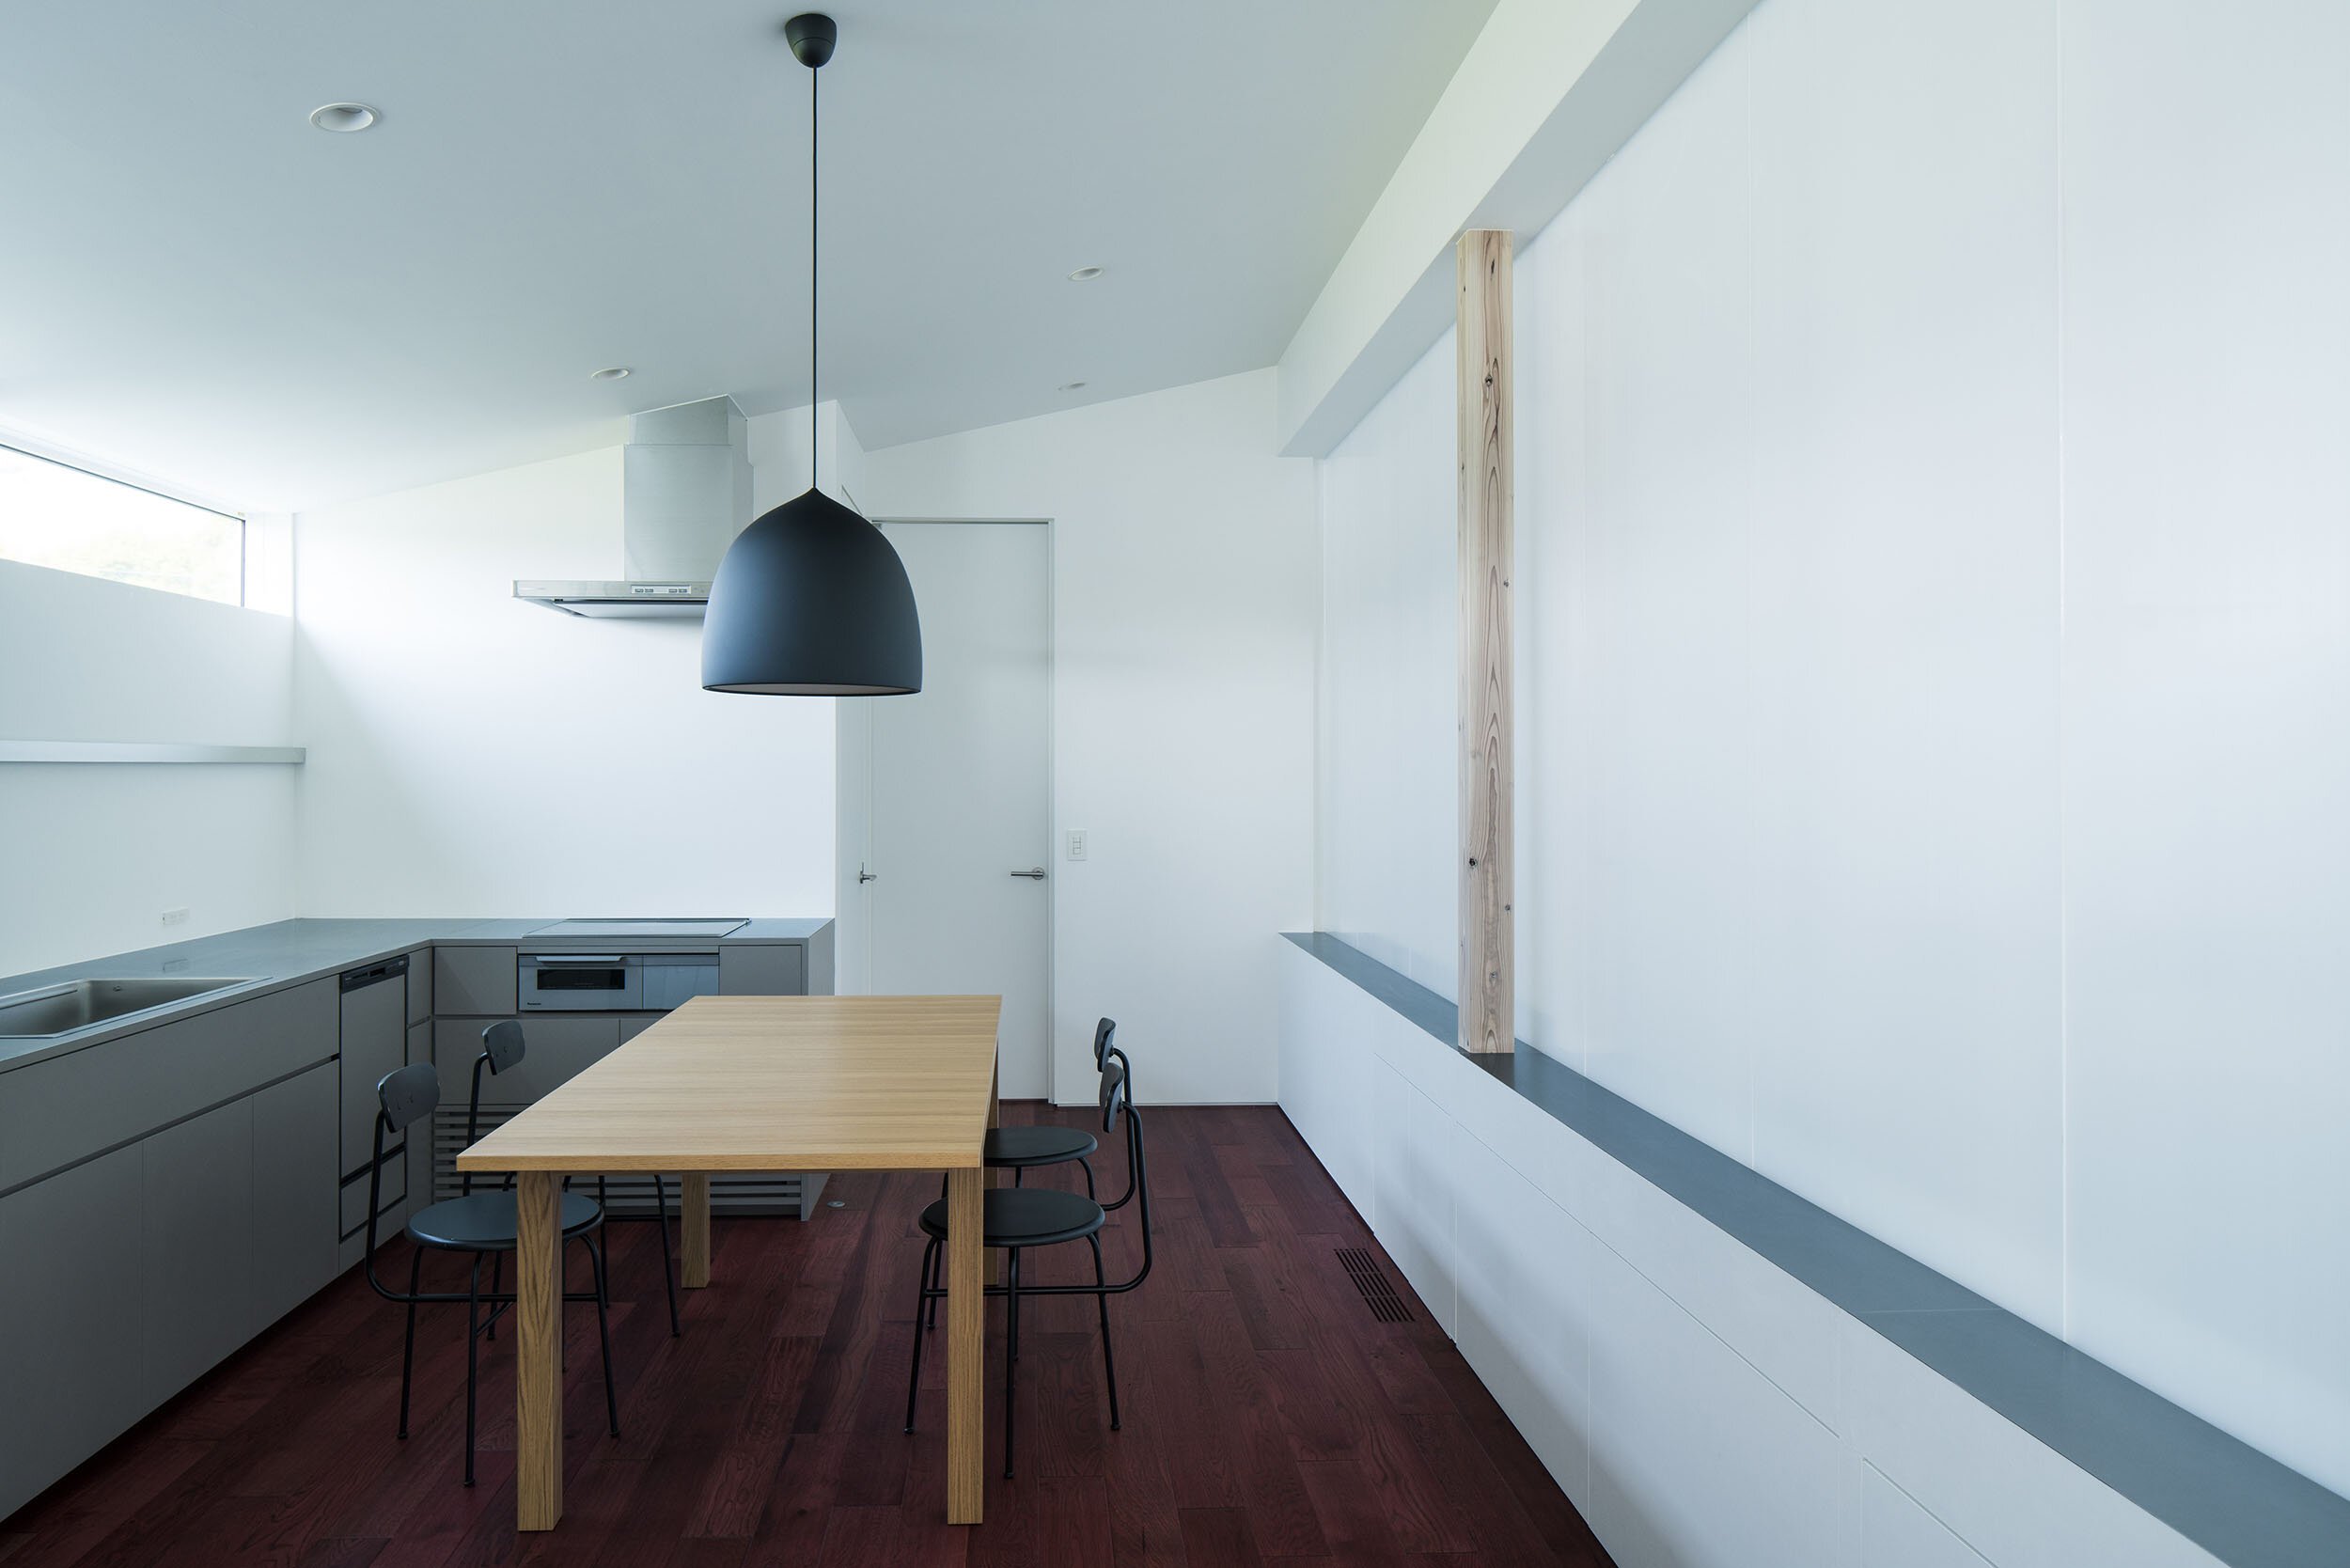  2id Architectsの岡田宰 Tsukasa Okada がデザインした住宅 Dan Dan Dan Houseのダイニングキッチン 